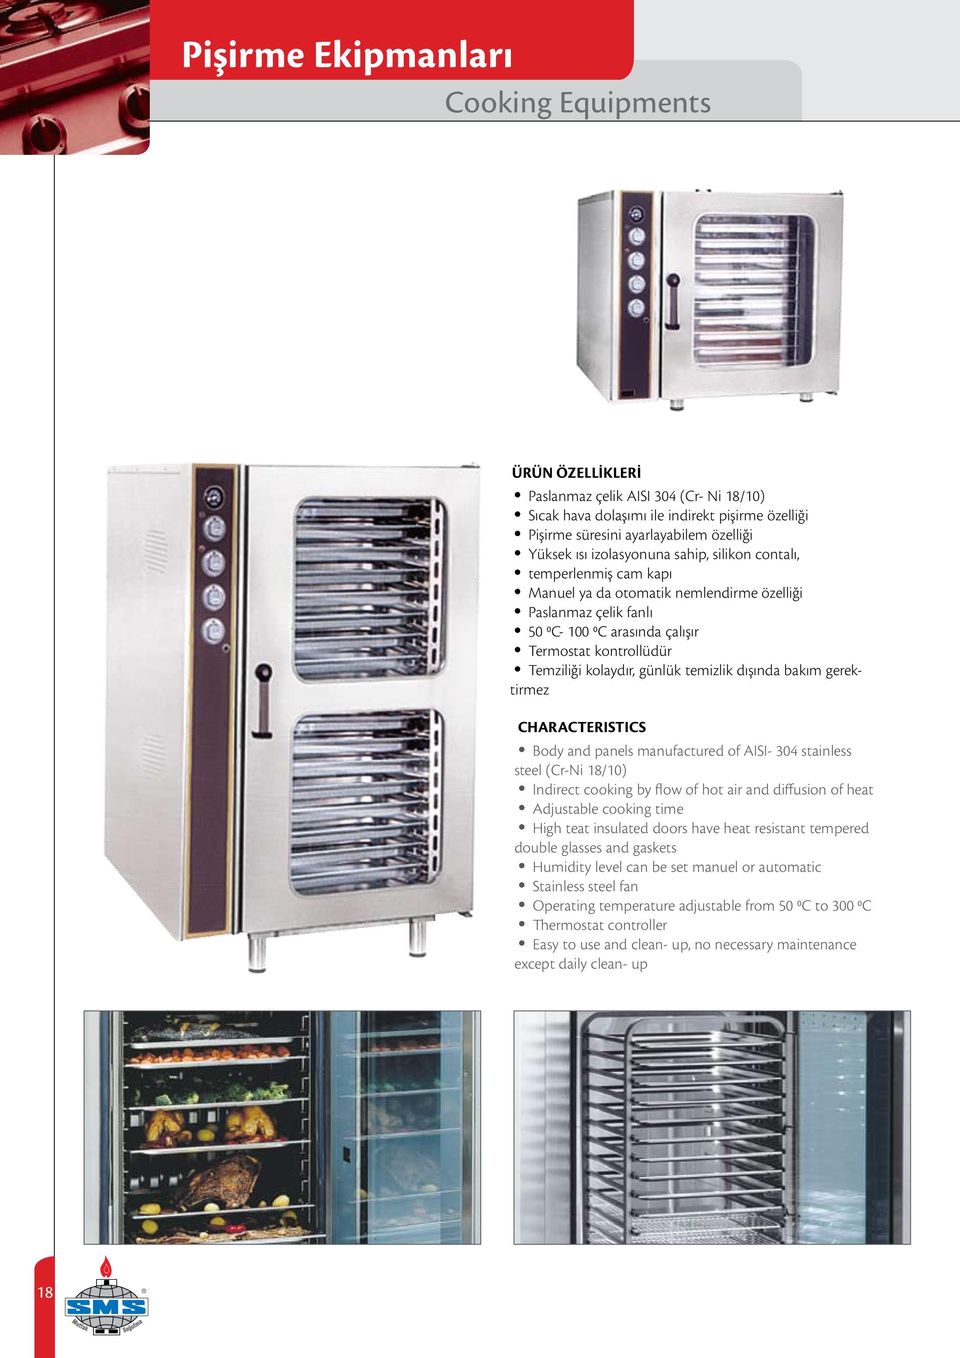 günlük temizlik dışında bakım gerektirmez CHARACTERISTICS Body and panels manufactured of AISI- 304 stainless steel (Cr-Ni 18/10) Indirect cooking by flow of hot air and diffusion of heat Adjustable